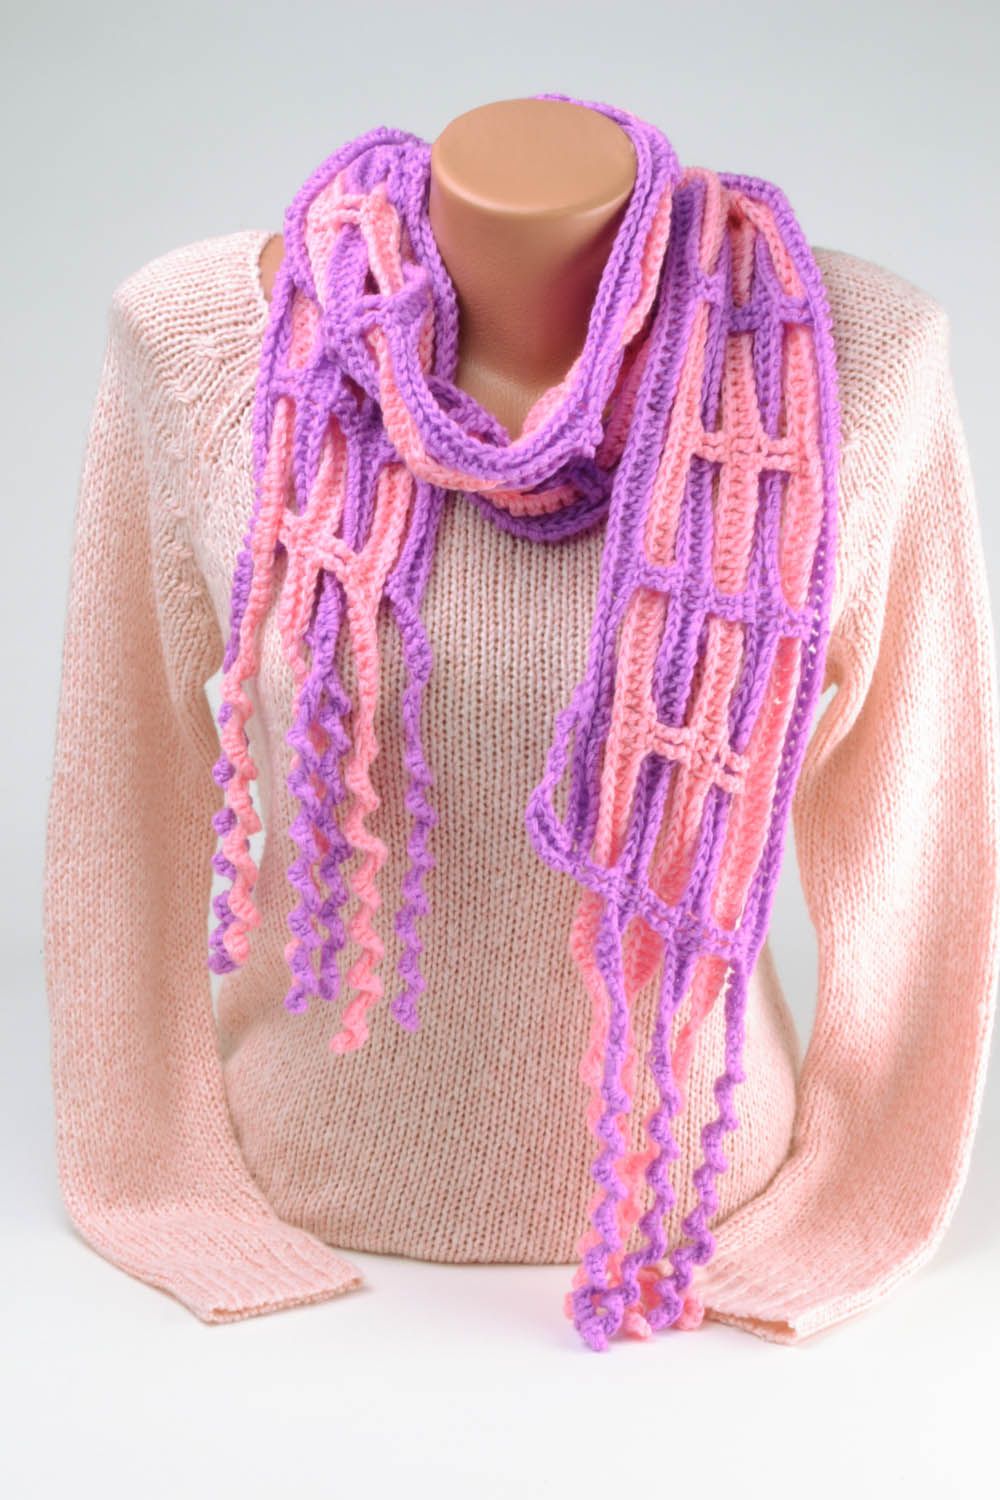 Violet crochet scarf photo 1